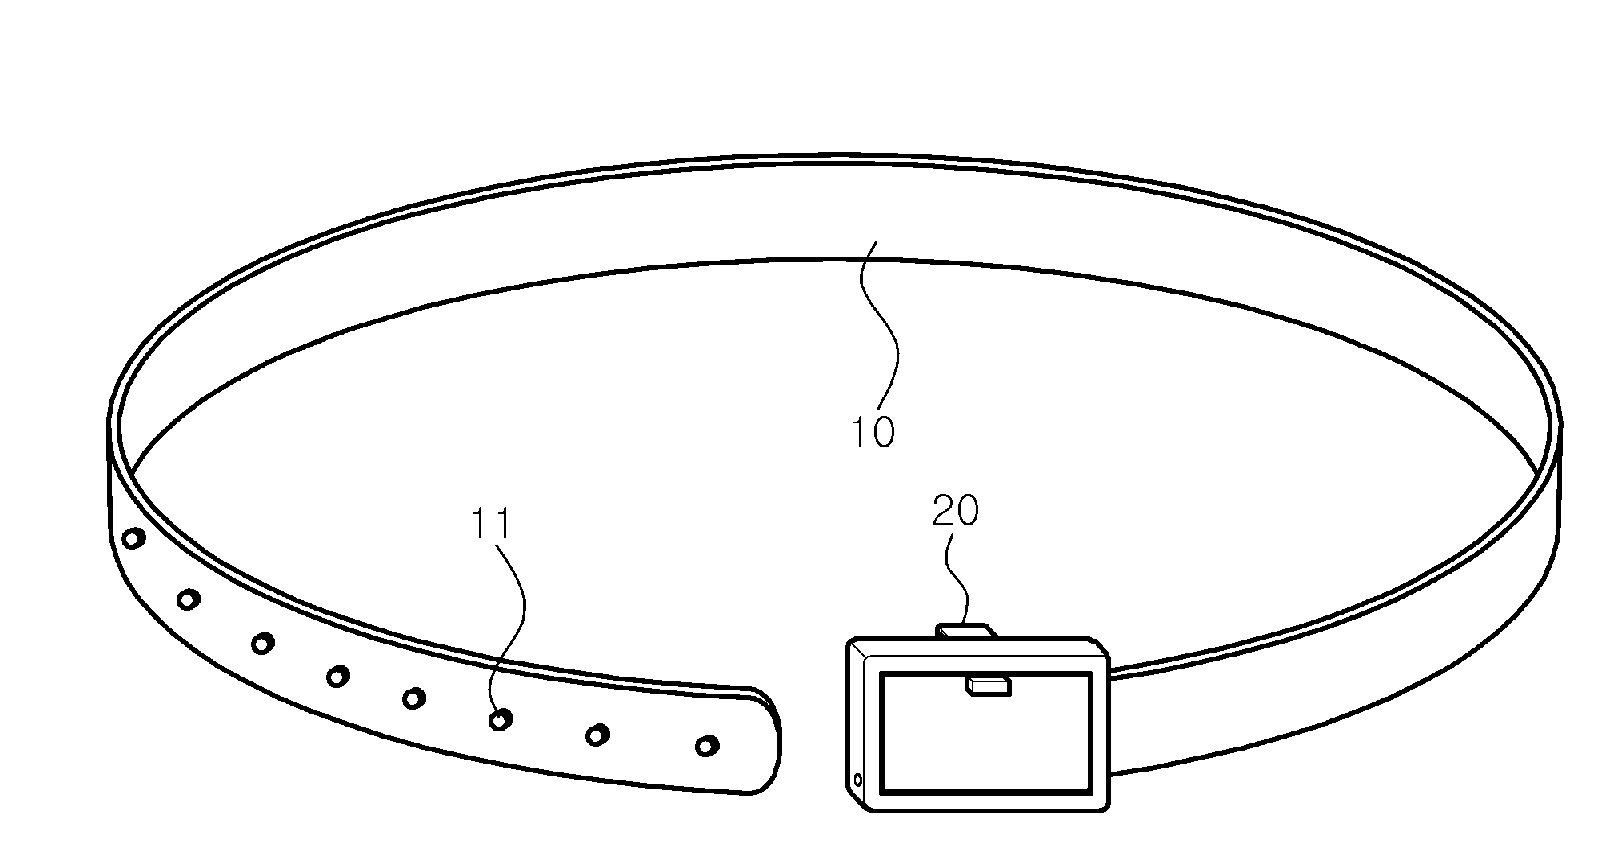 Waist belt for automatically measuring waist circumference